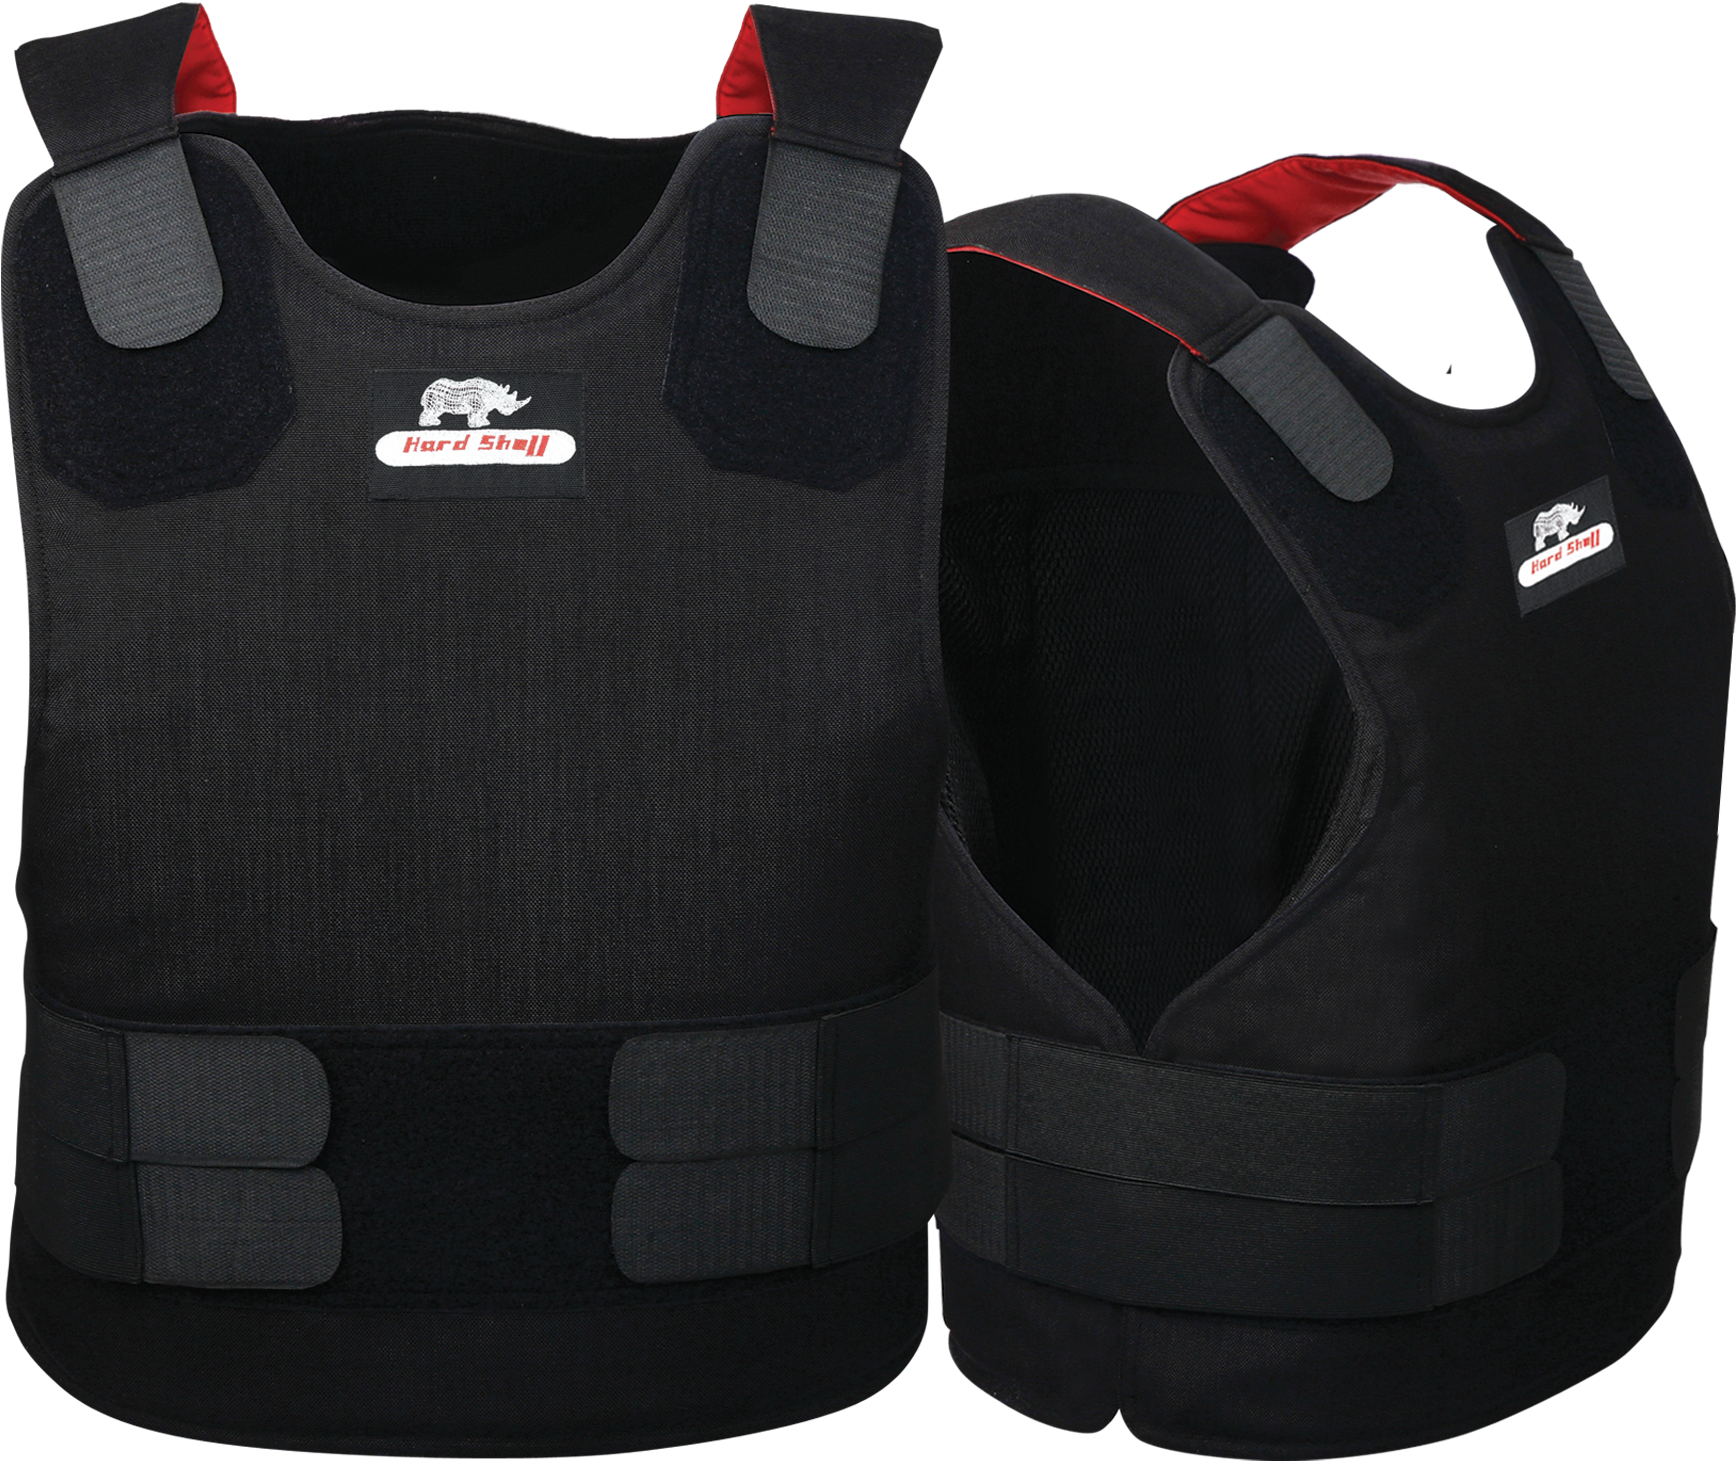 Body armour vest PNG, transparent png download